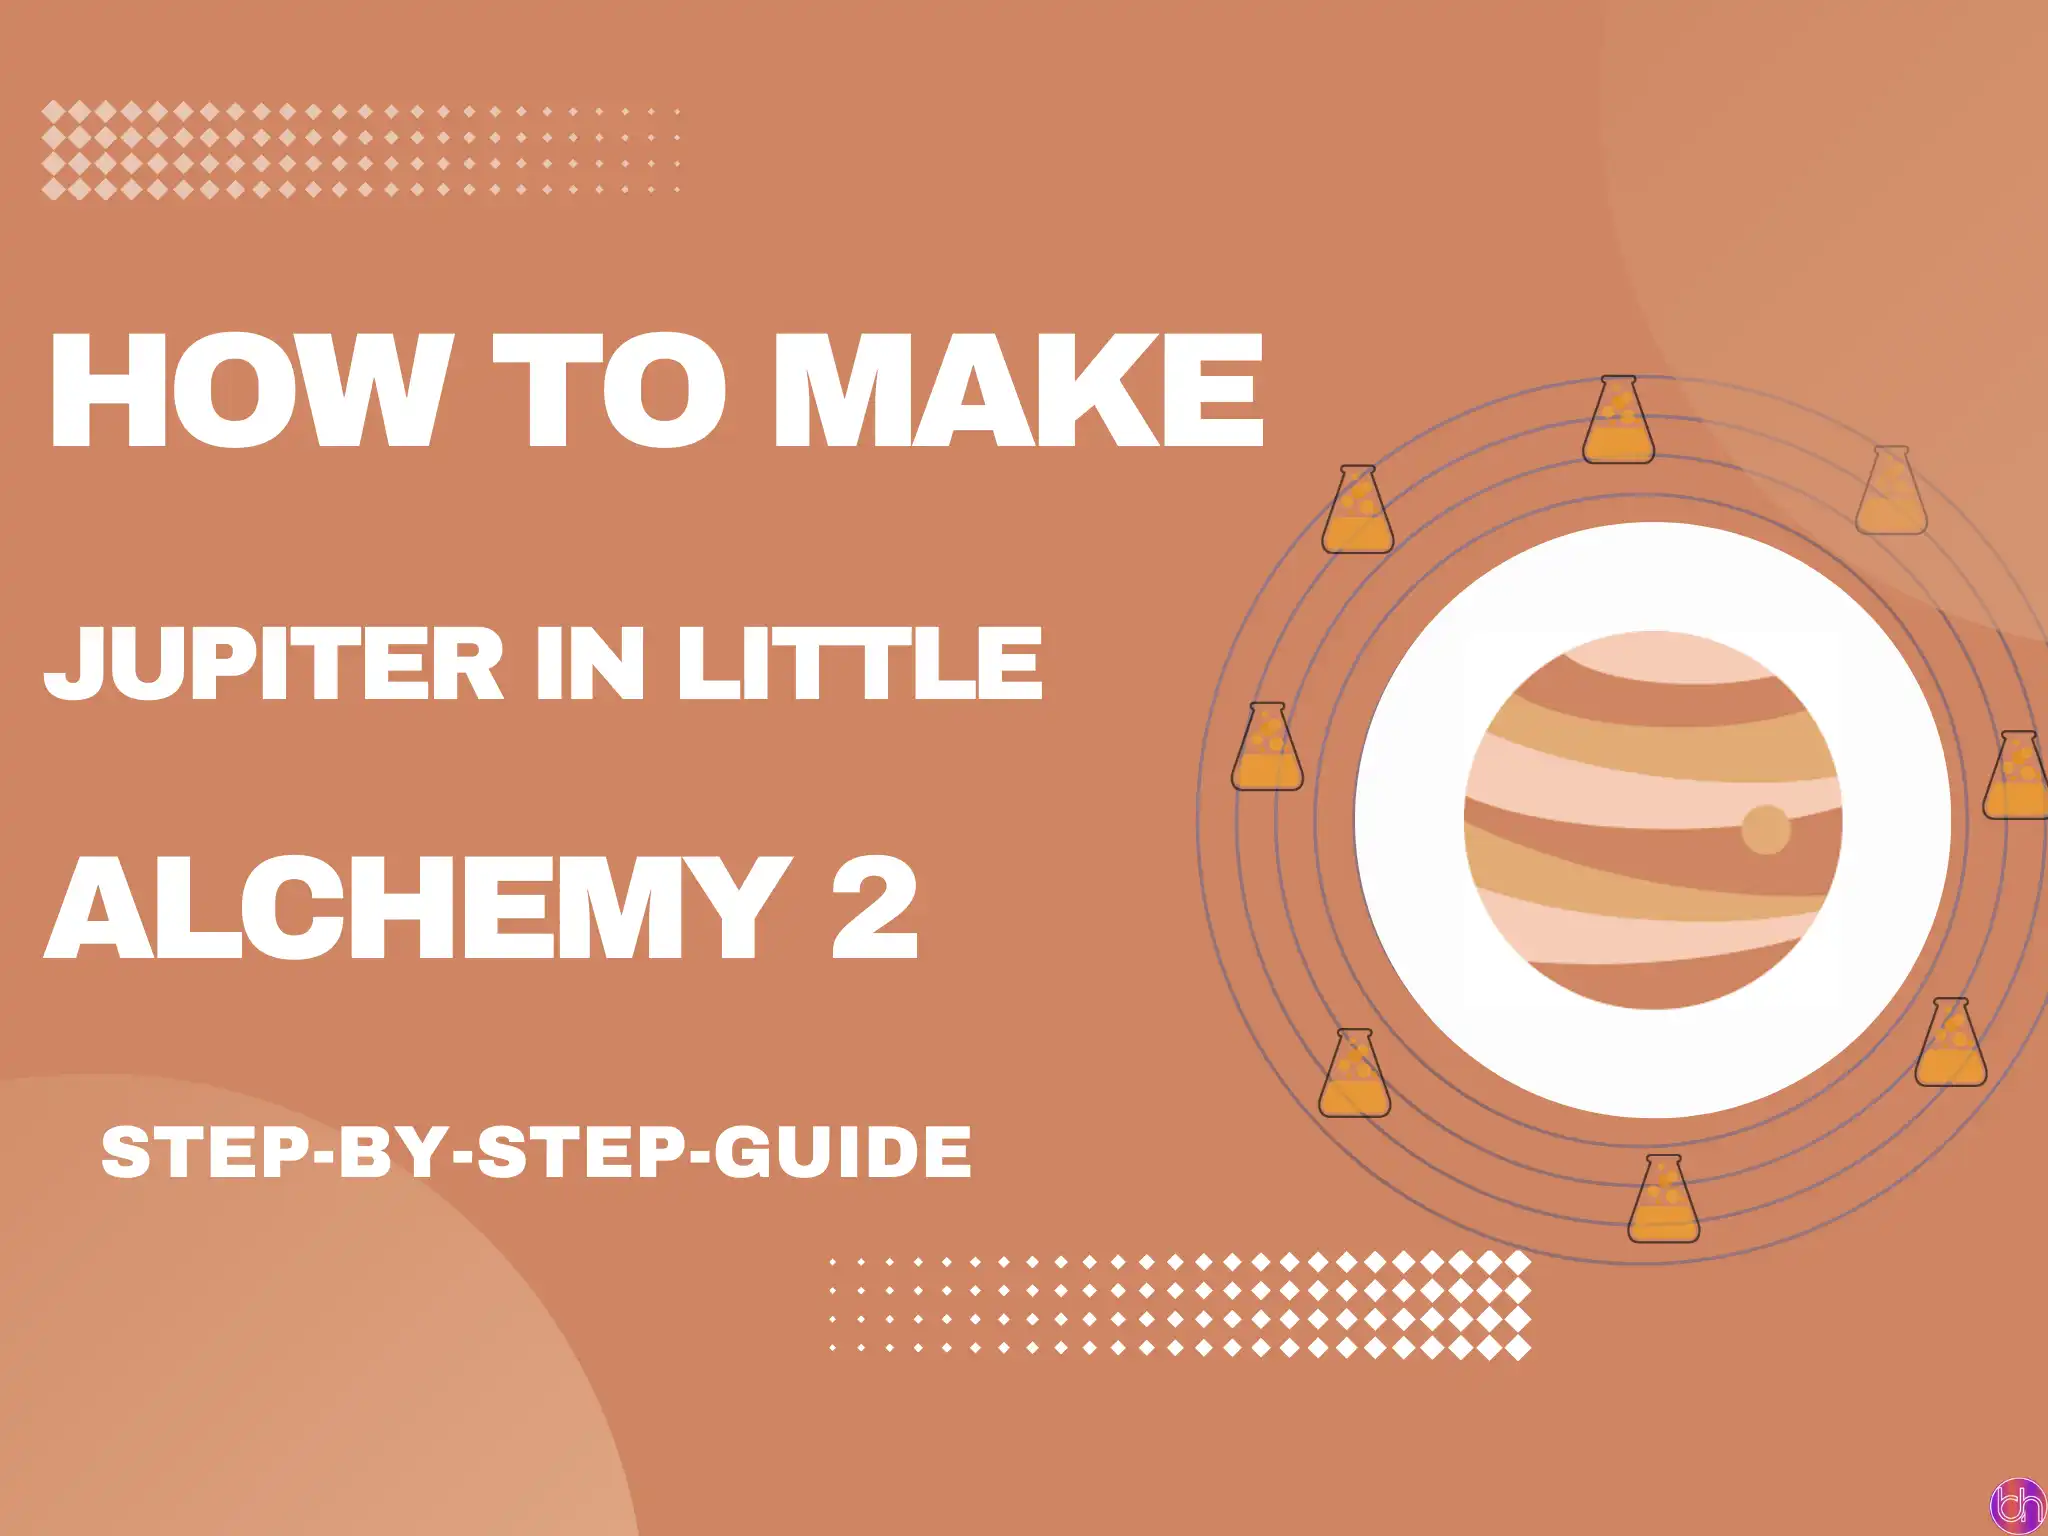 how to make jupiter in little alchemy 2